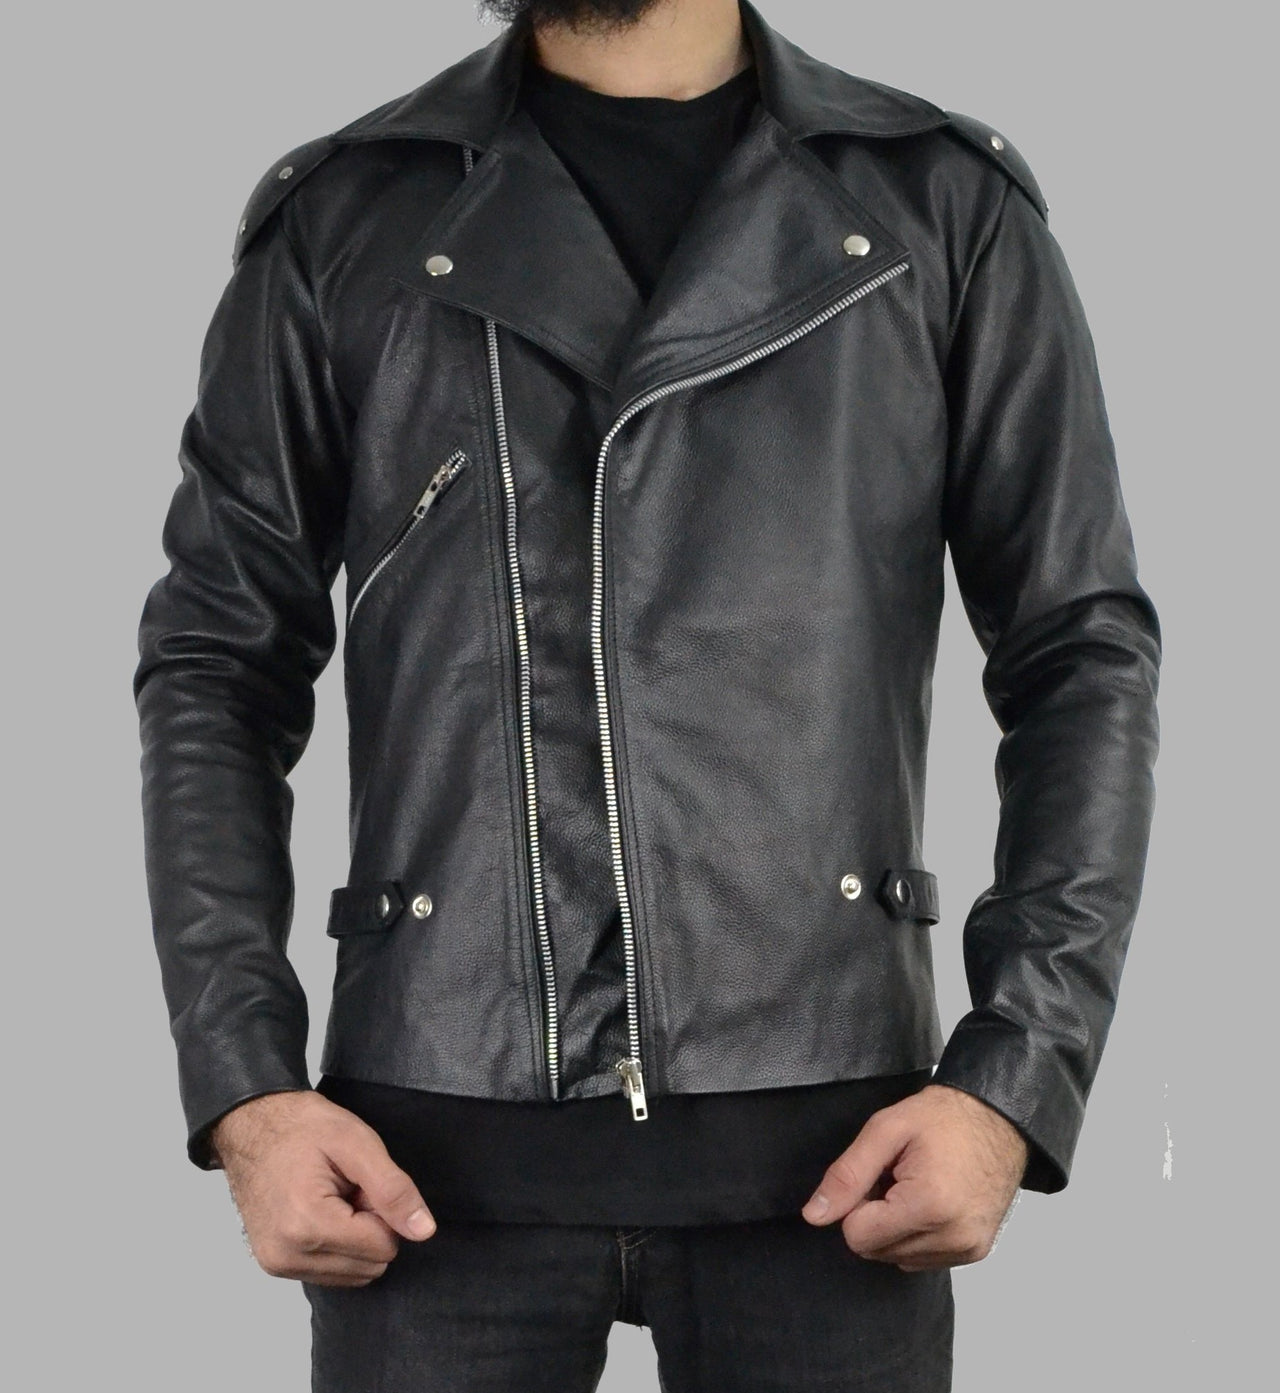 Call Me Kat Max Leather Jacket | Cheyenne Jackson Jacket